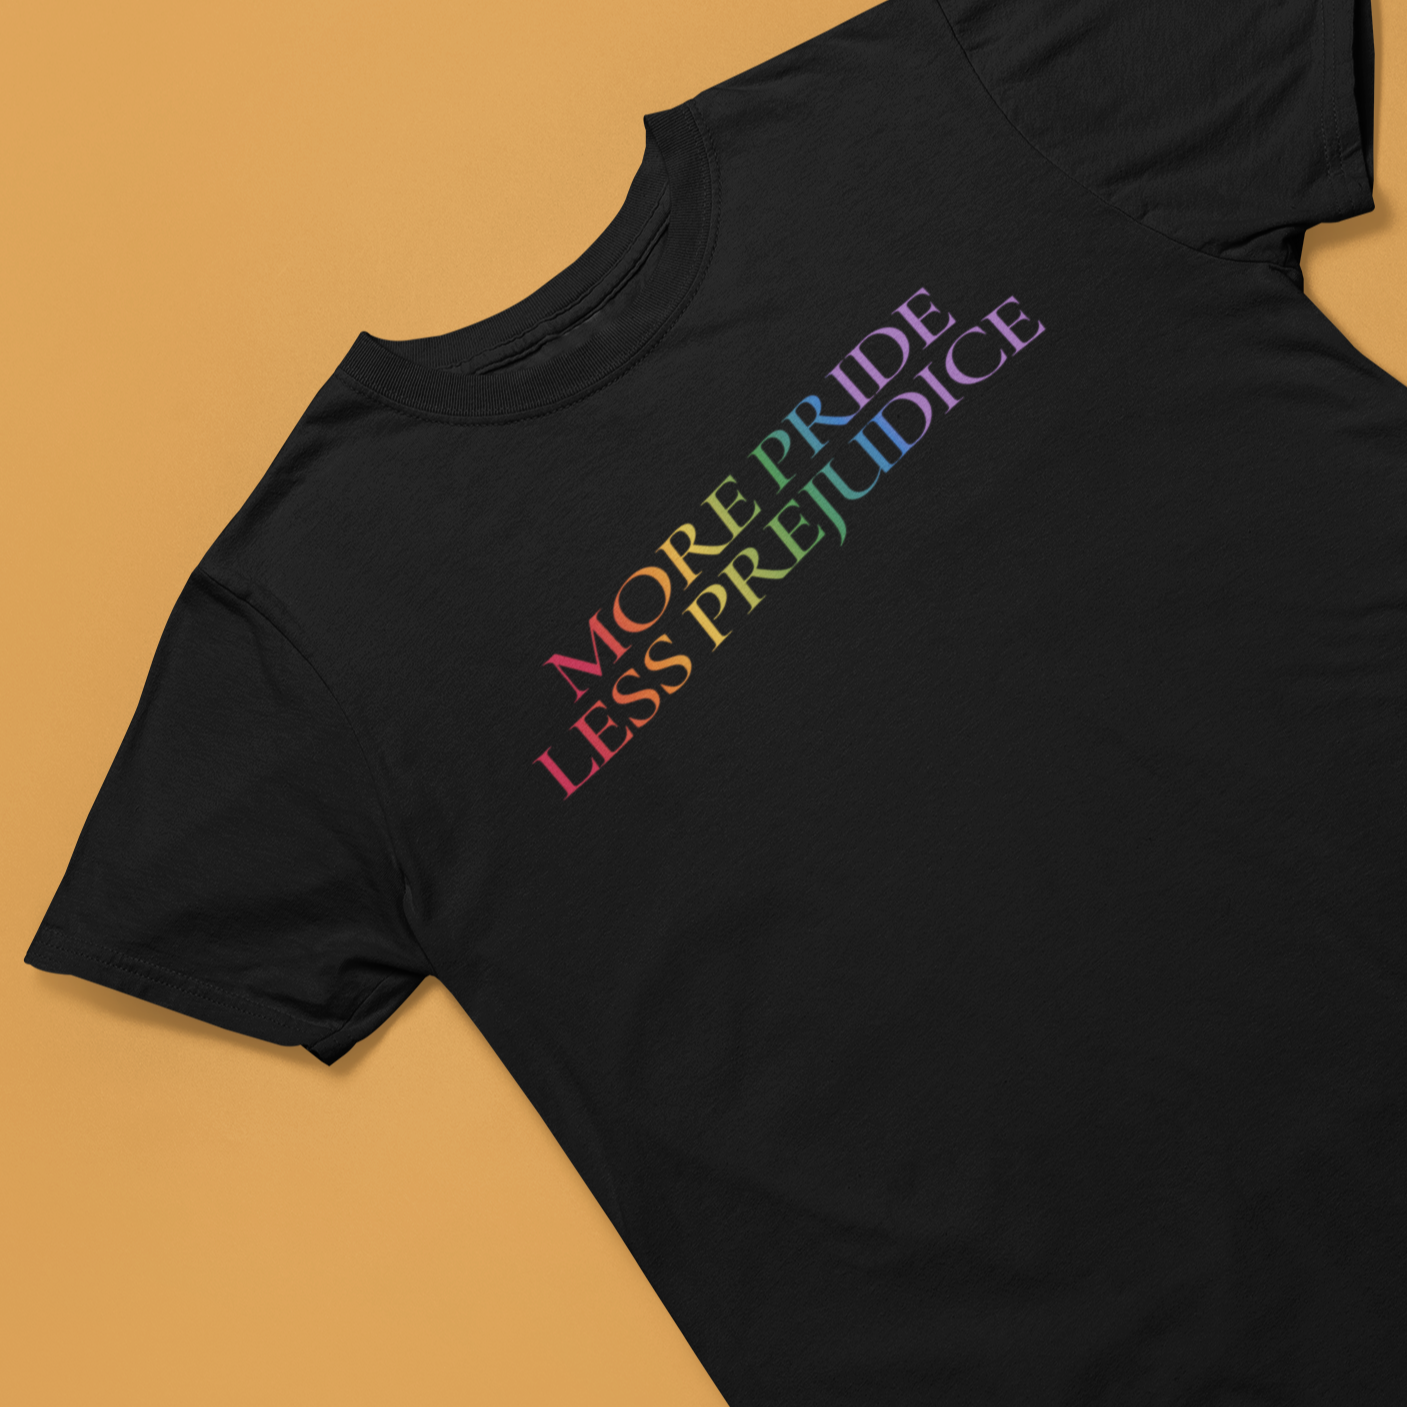 More Pride Less Prejudice Rainbow T-Shirt - Rose Gold Co. Shop